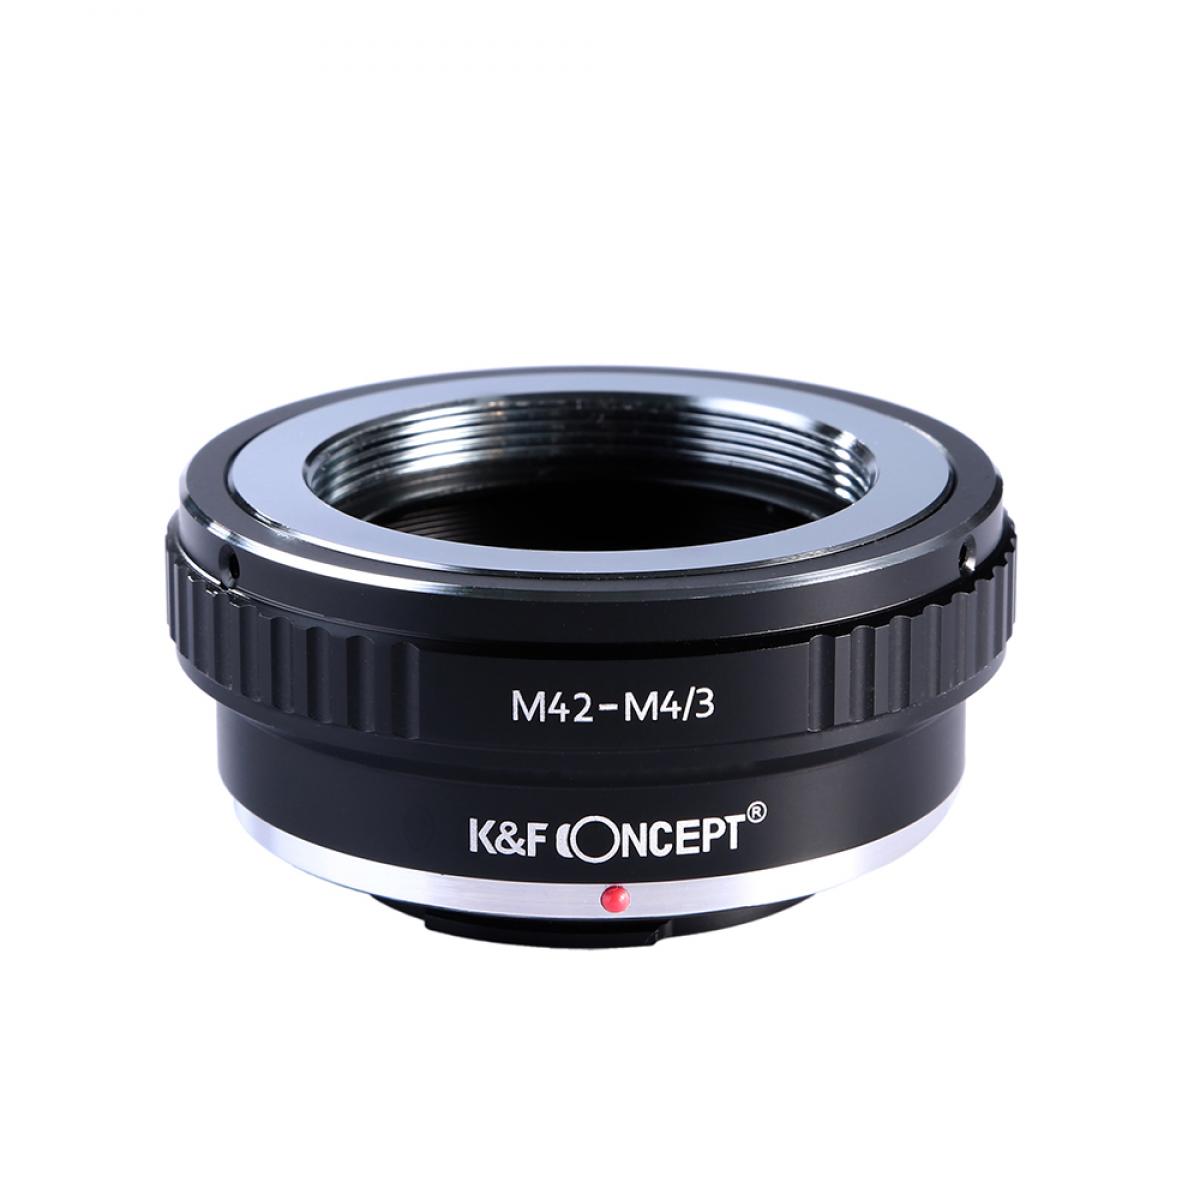 K&F Concept Lens Adapter KF06.076 for M42 - M4/3